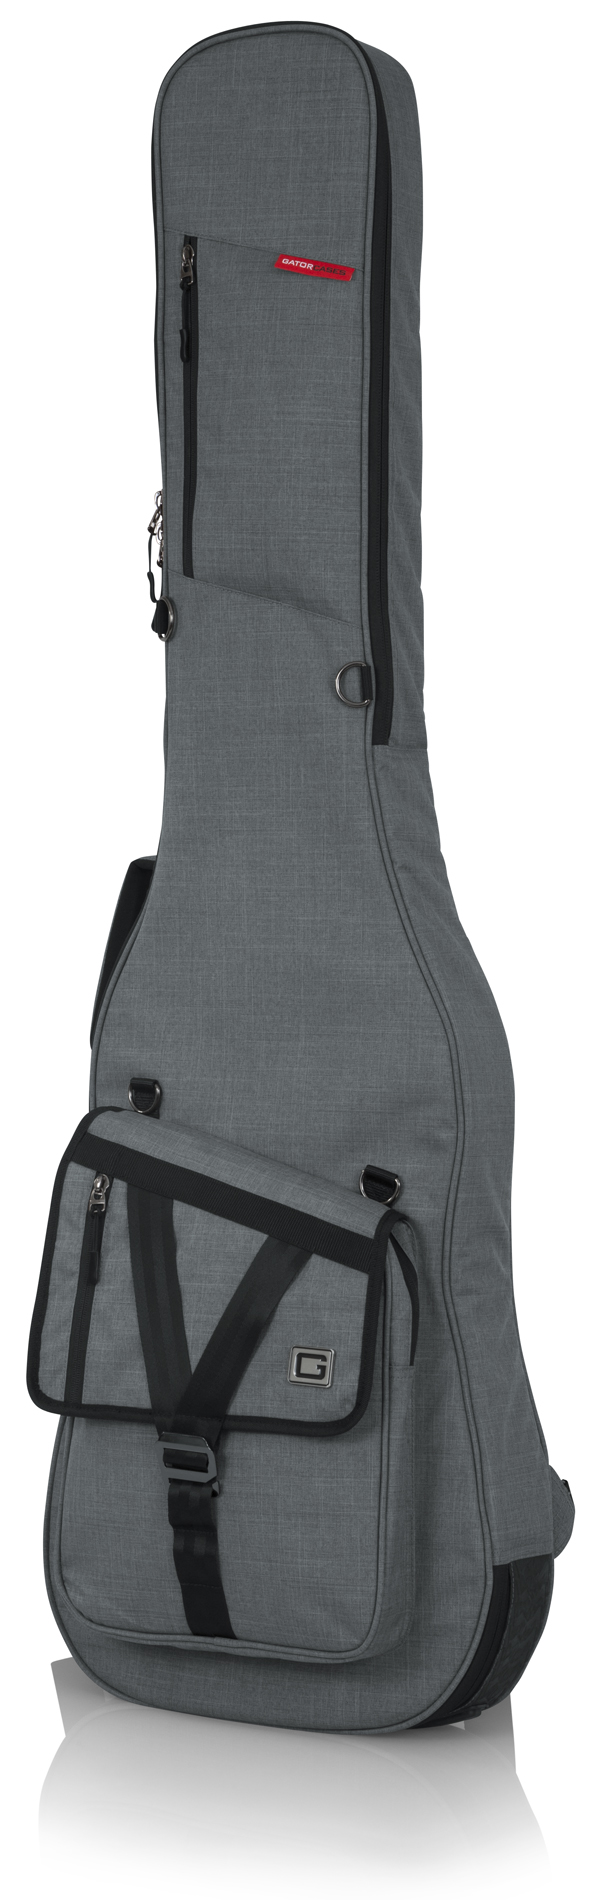 Transit Bass Guitar Bag; Light Grey-GT-BASS-GRY - Gator Cases